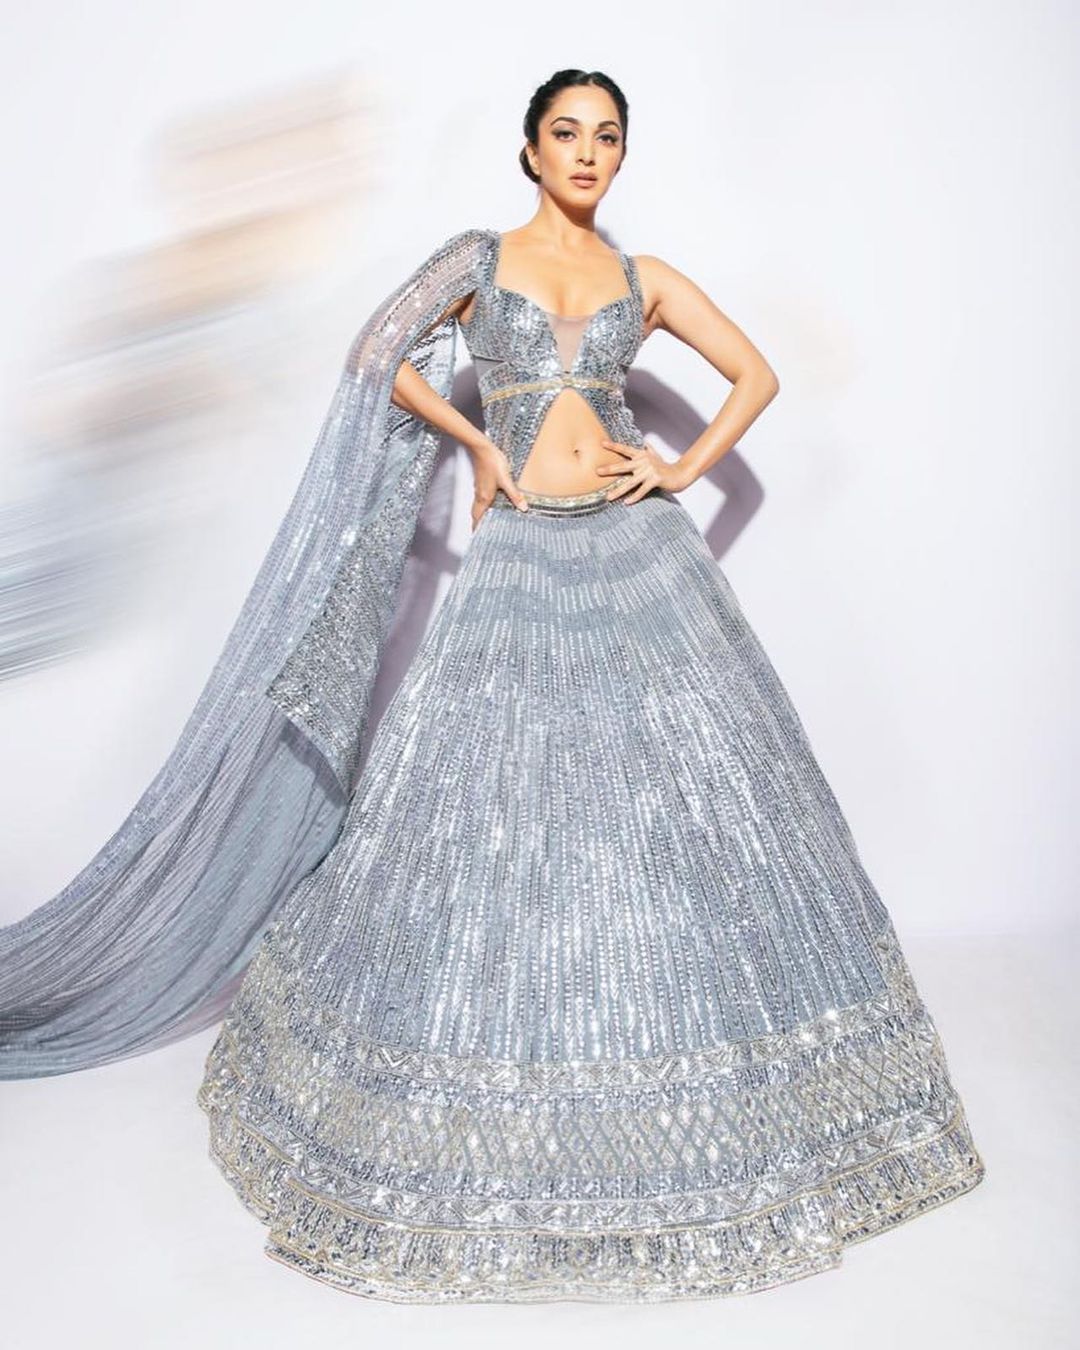 Kiara Advani strikes a confident pose in the shimmering silver lehenga.